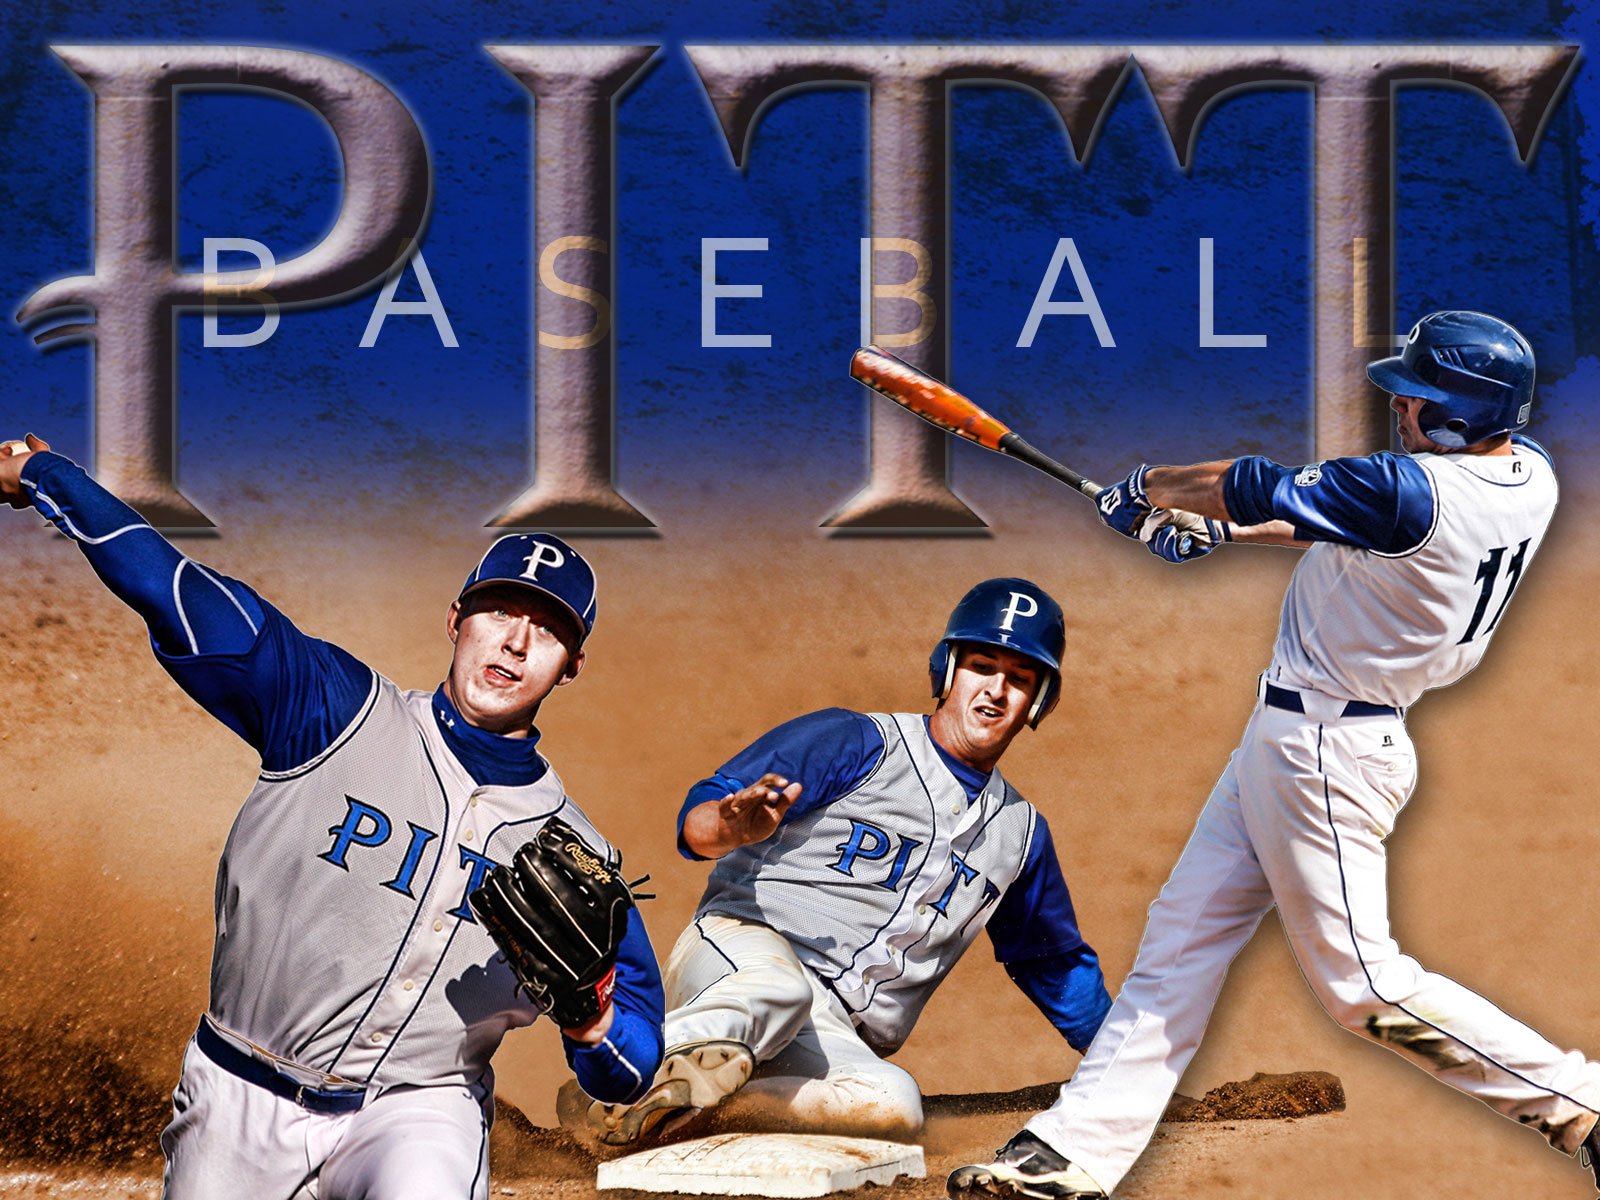 2011 PCC Baseball Wallpaper   1600